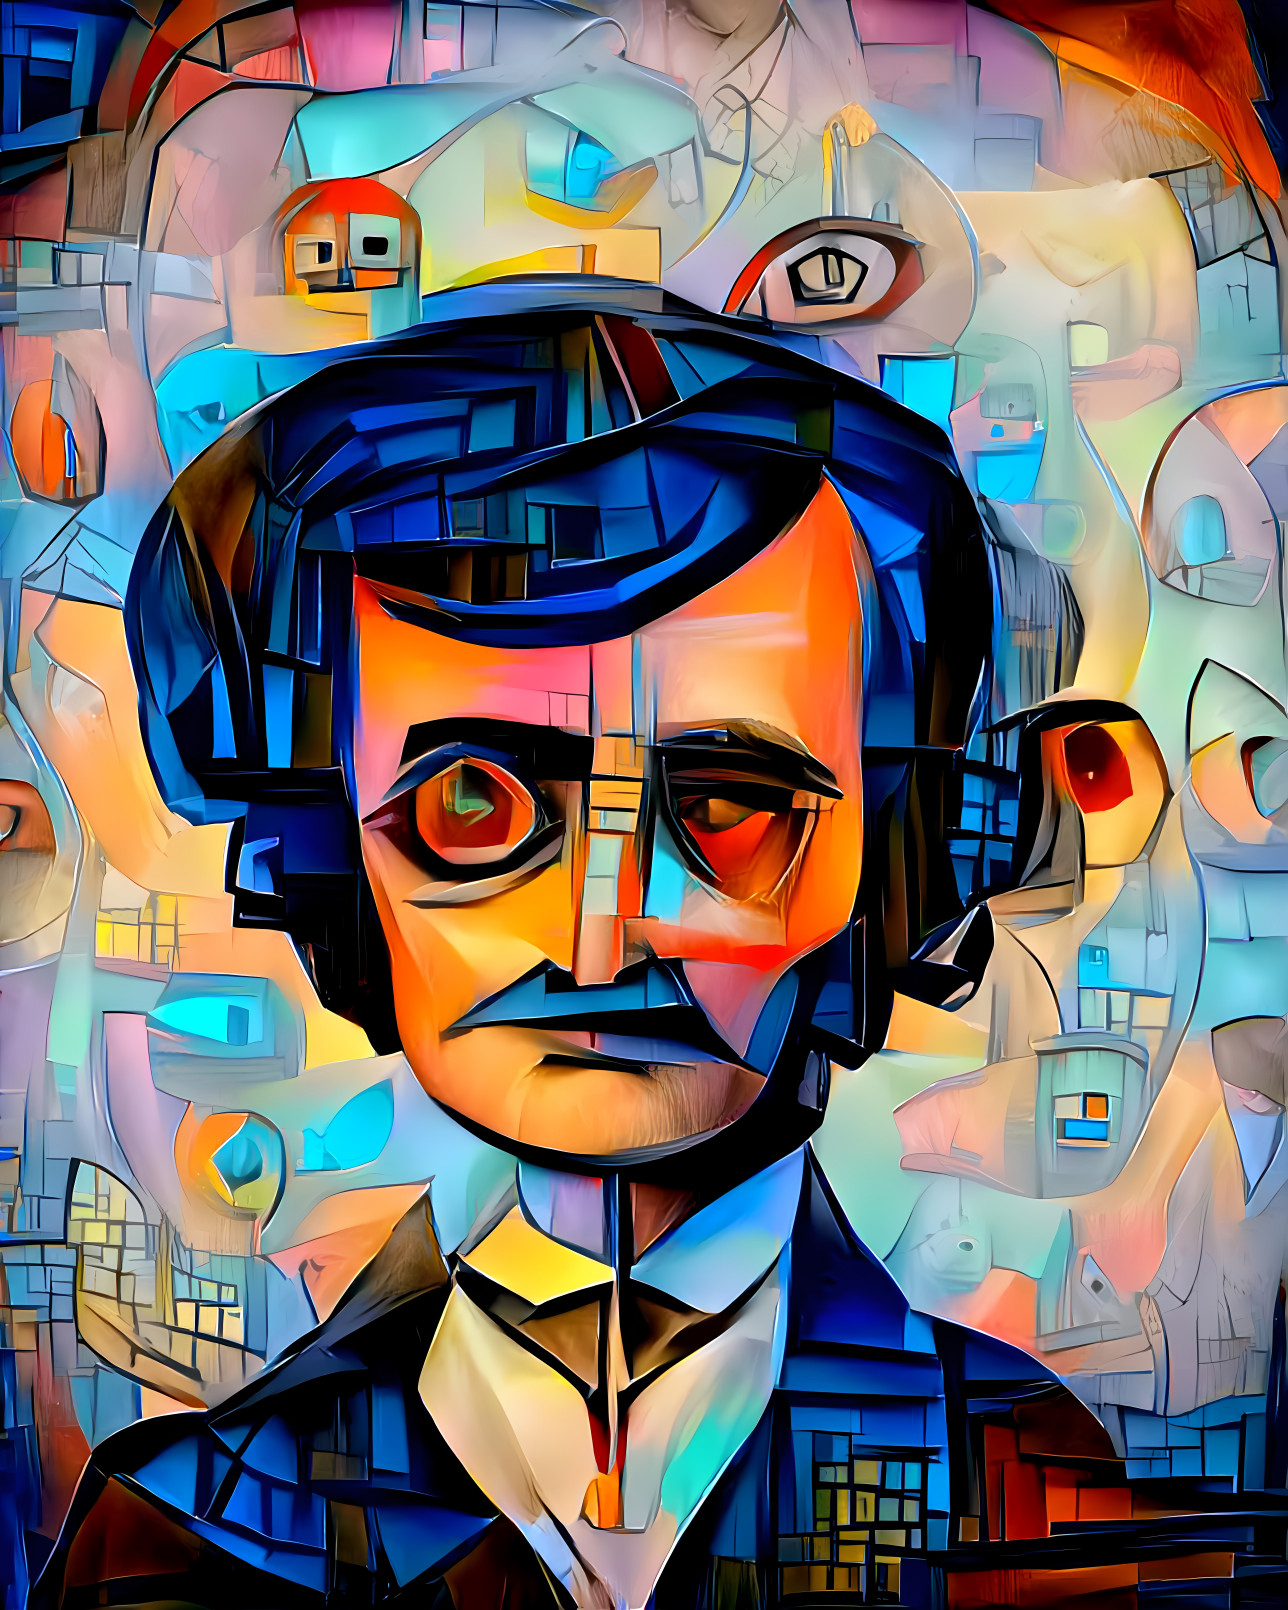 Cubist Edgar Allan Poe